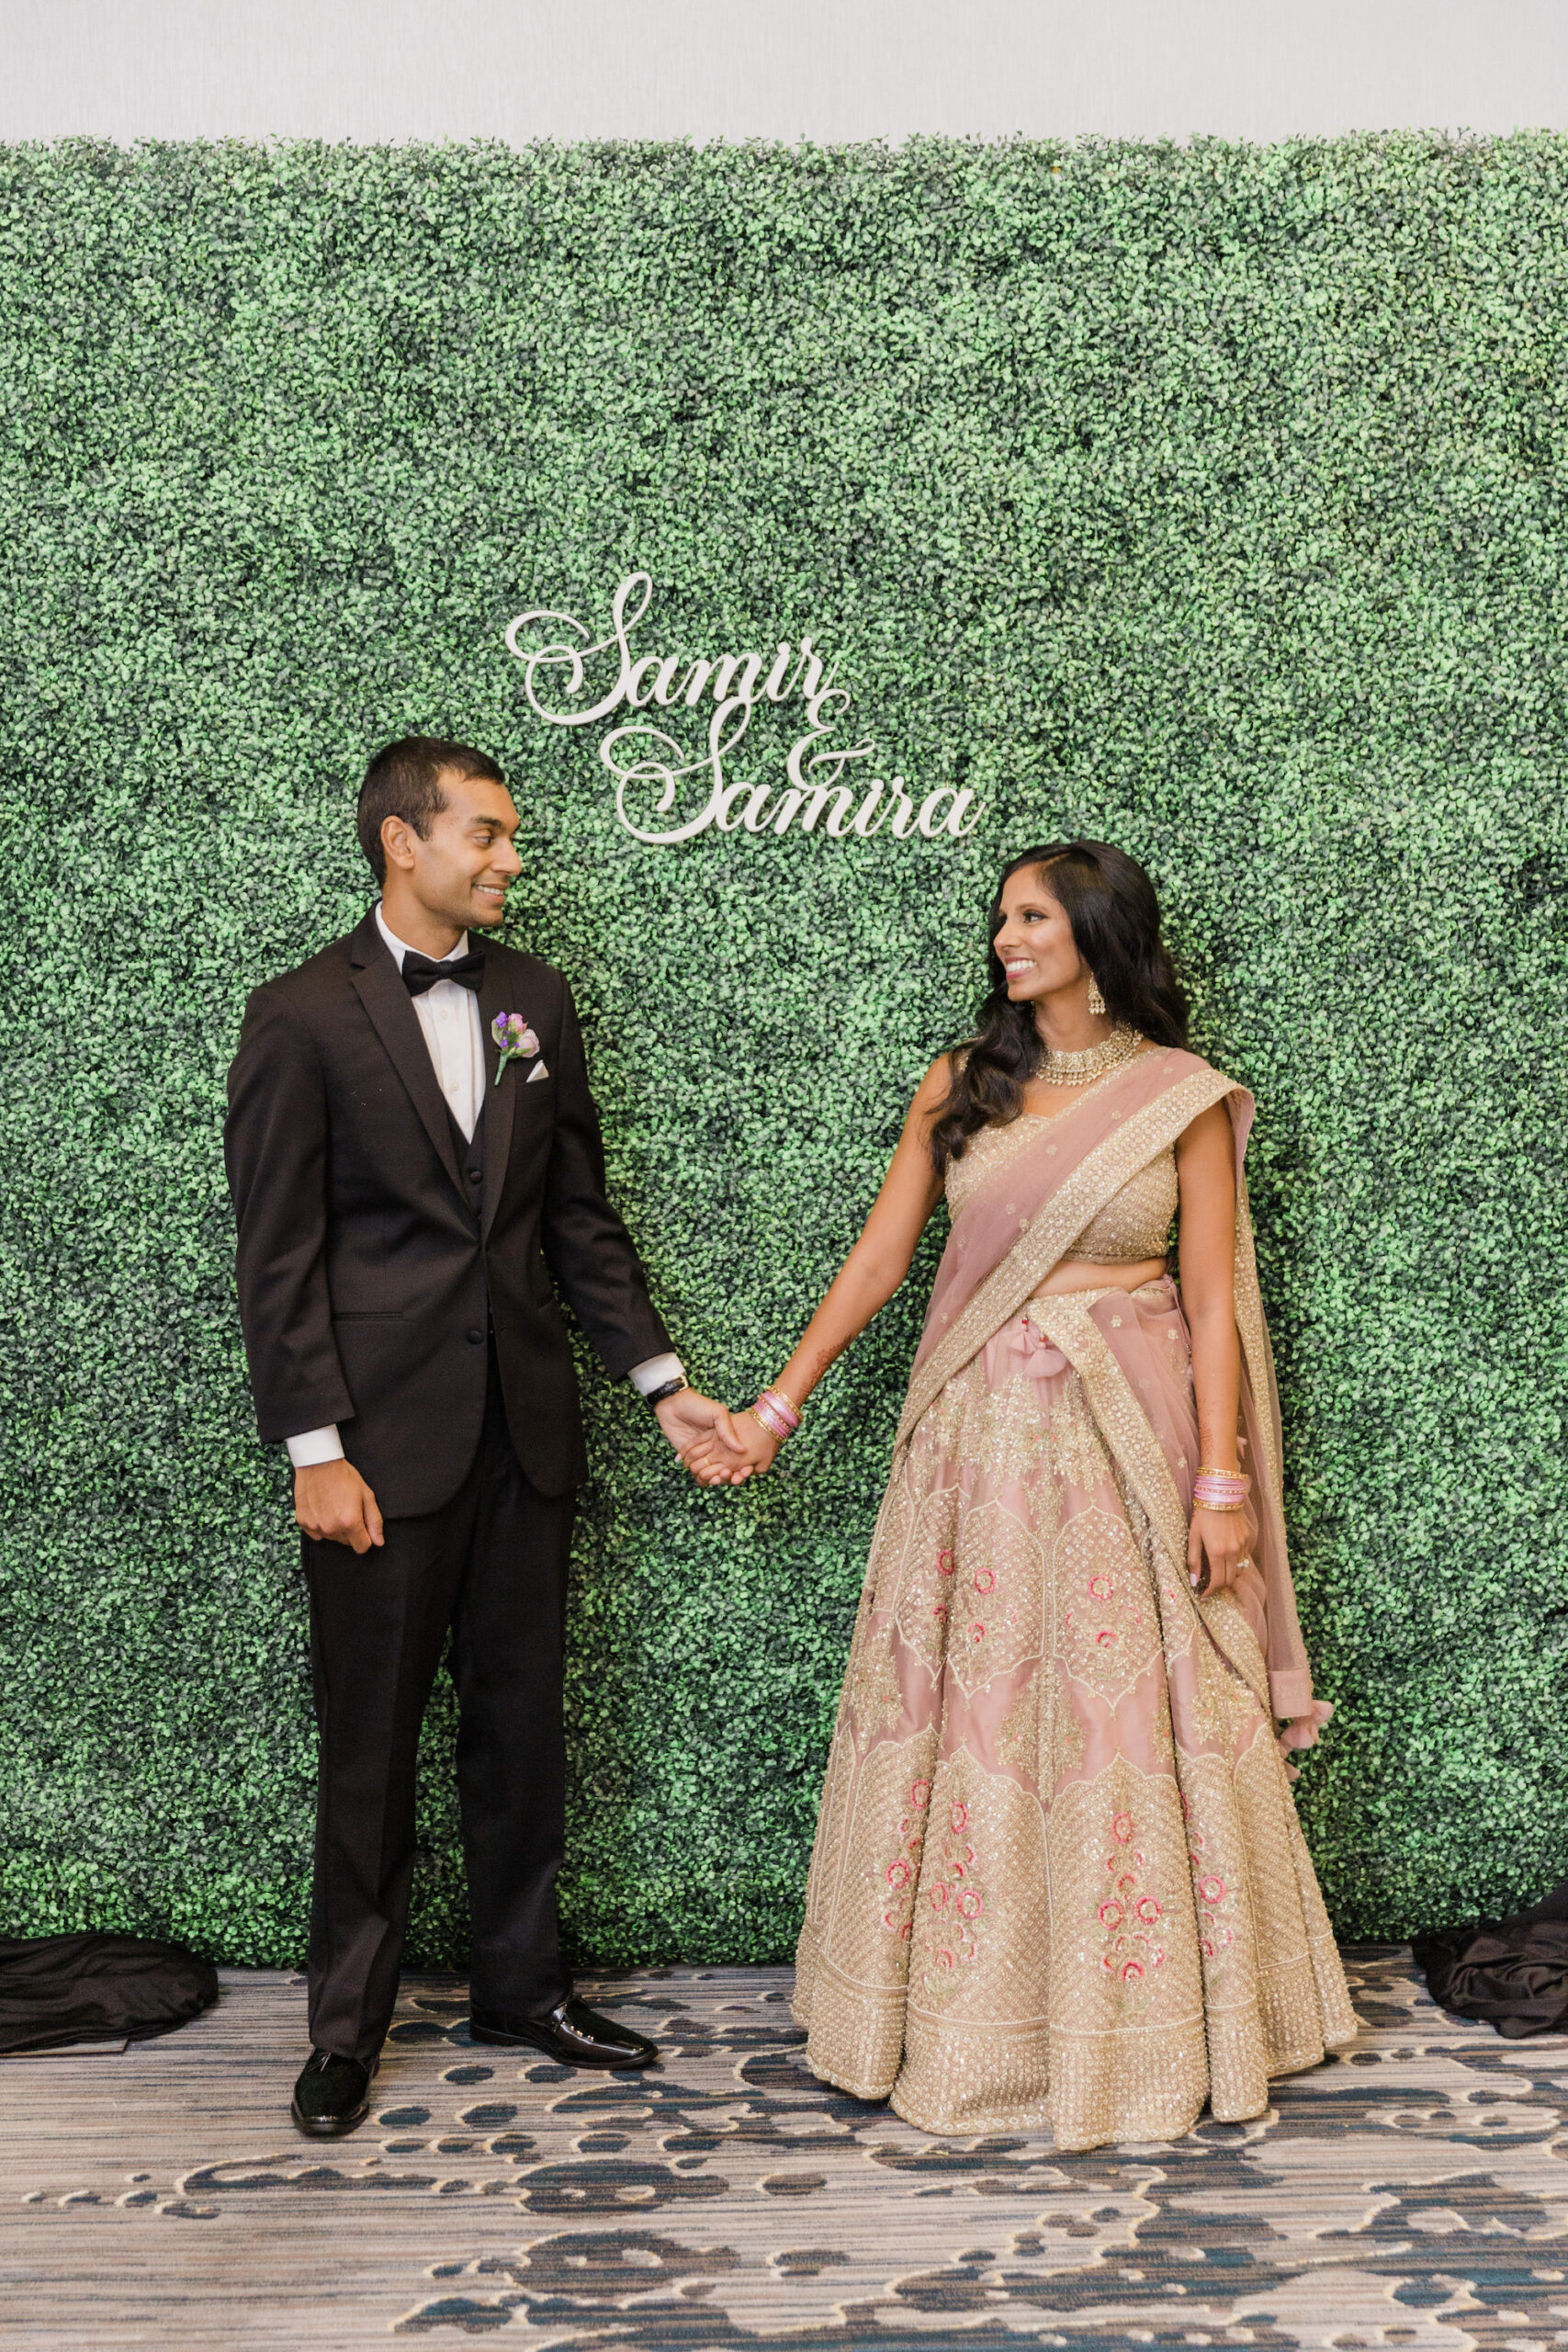 Green Grass Wall Backdrop Indian Wedding Reception Photo Op Inspiration | Tampa Bay Coordinator Coastal Coordinating